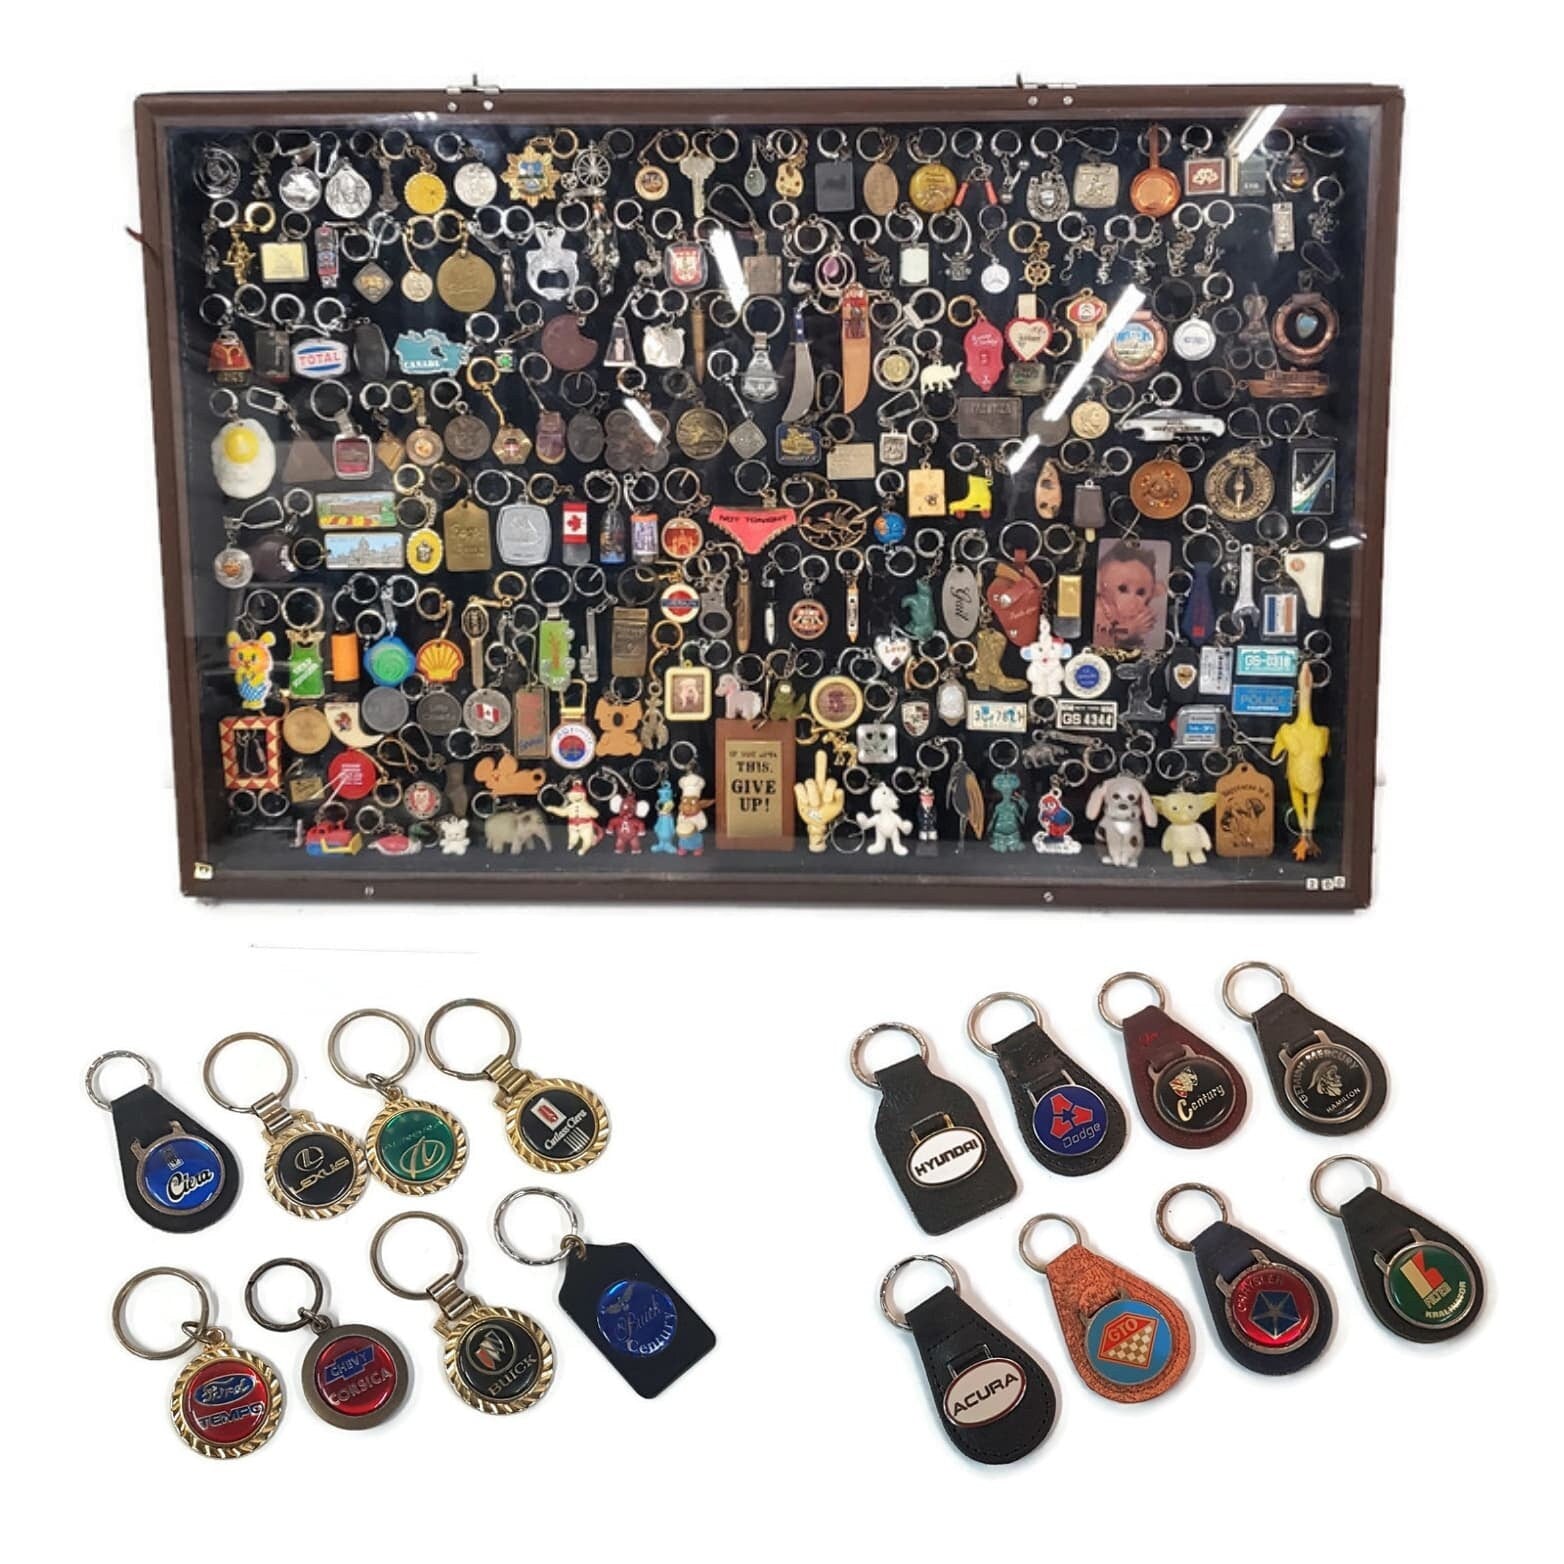 gemini mercury key chain keychain key fob keytag vintage automotove keychain gift collectible